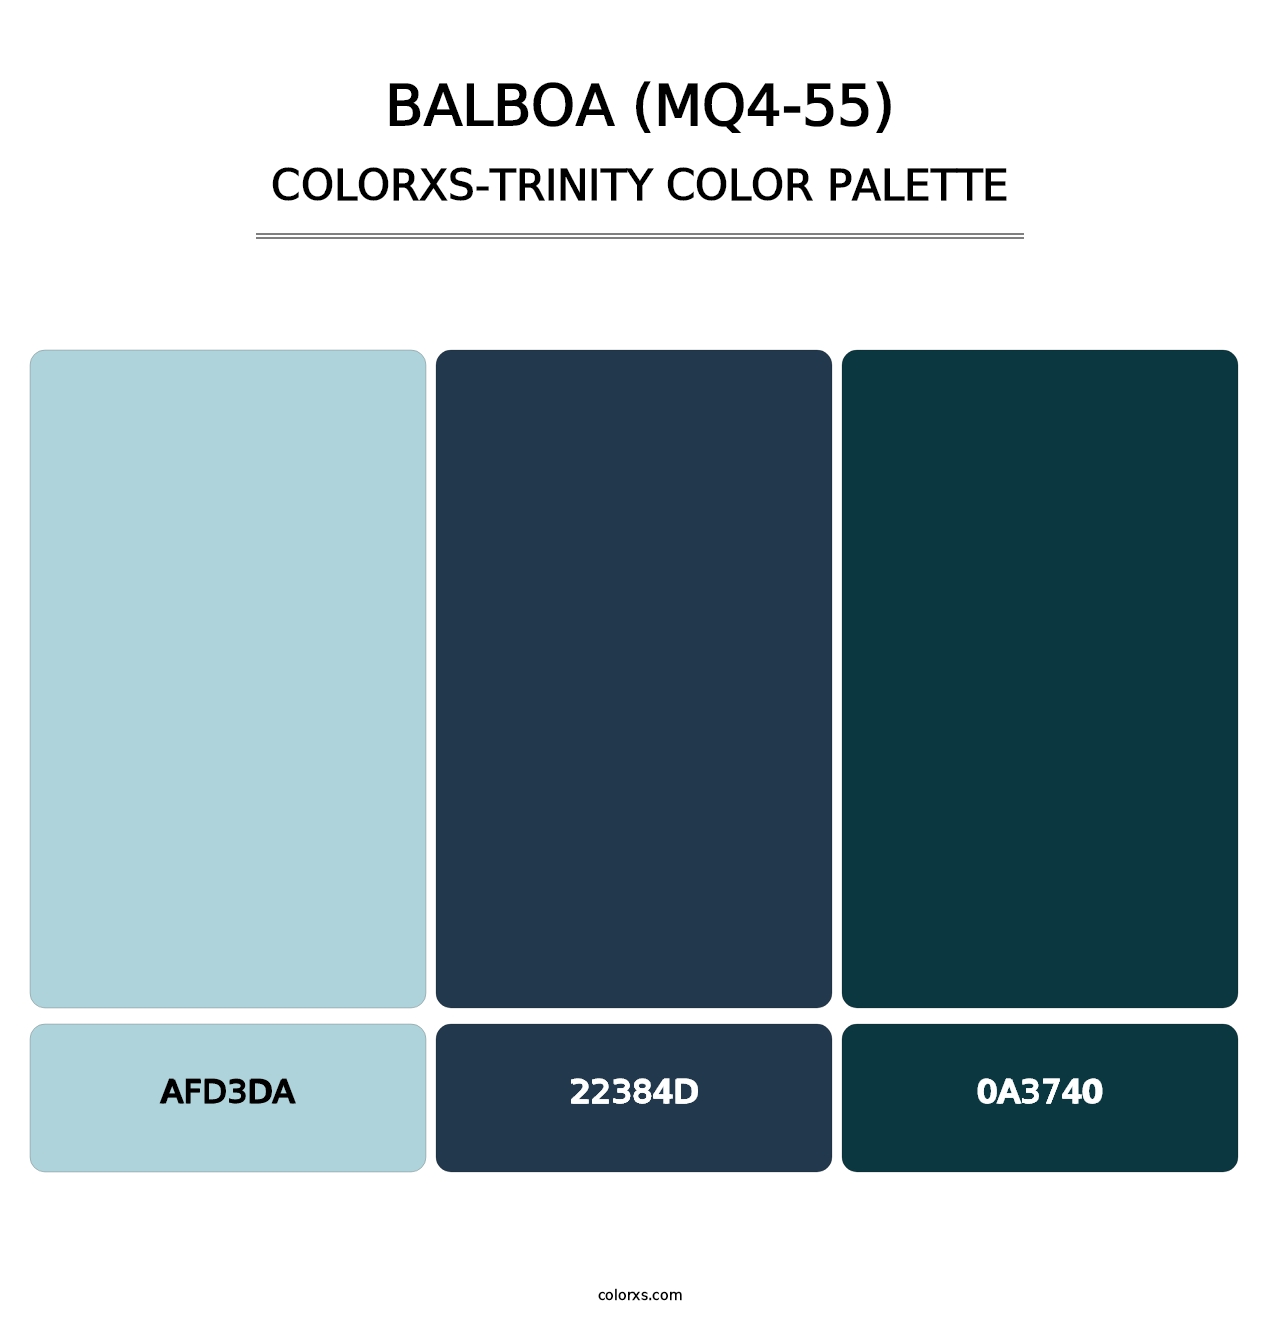 Balboa (MQ4-55) - Colorxs Trinity Palette